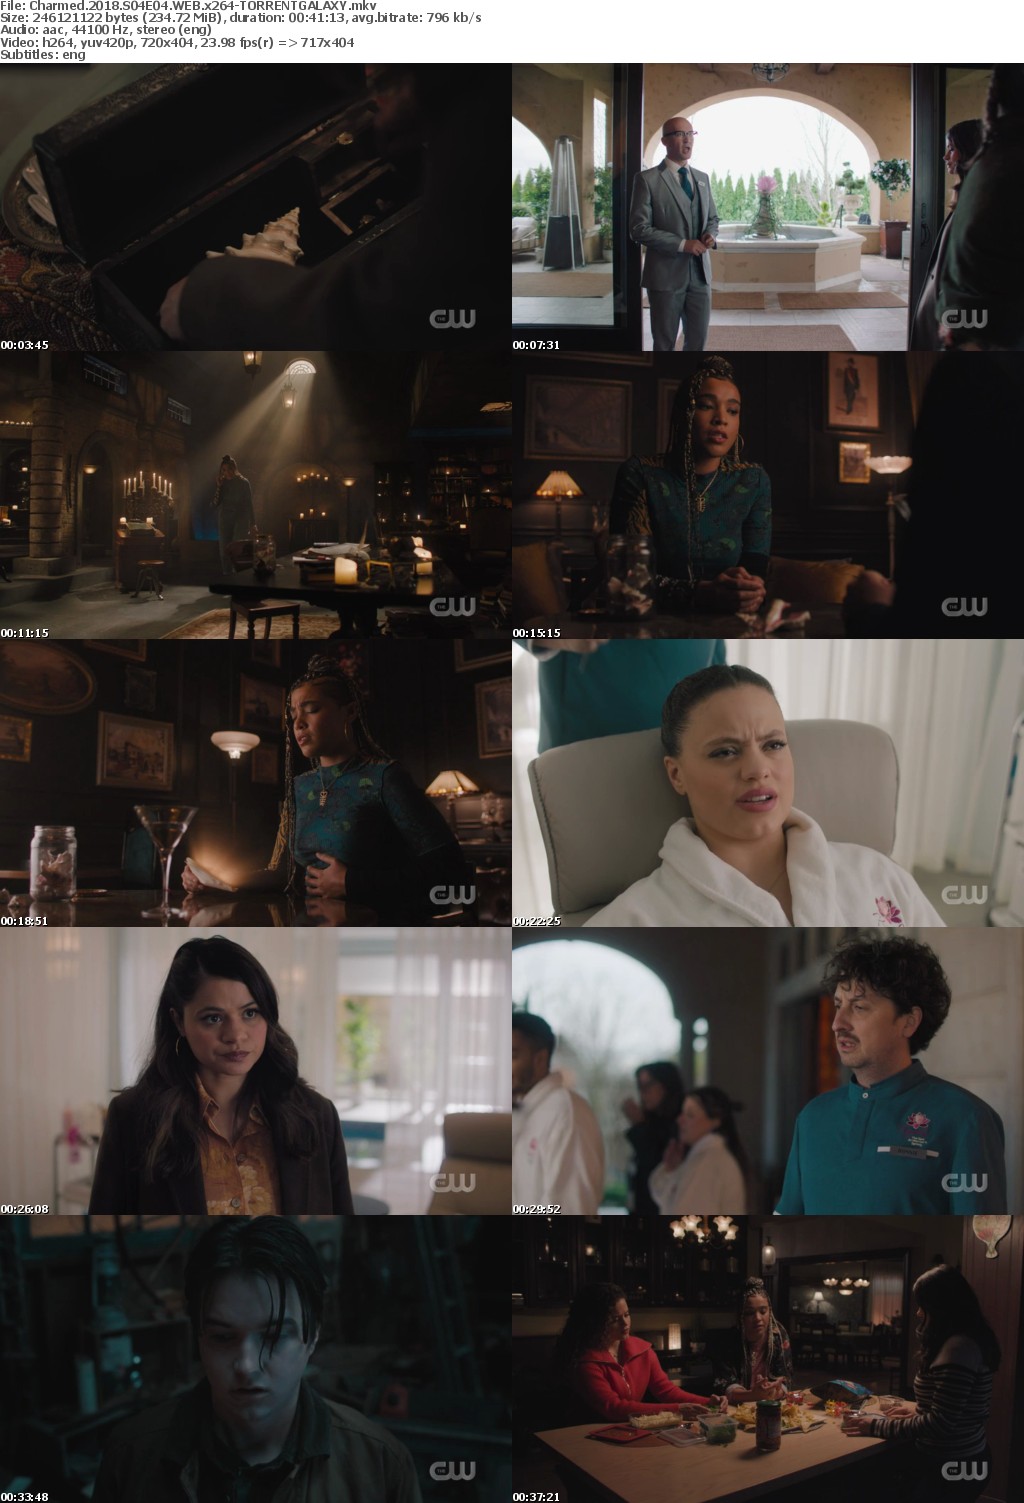 Charmed 2018 S04E04 WEB x264-GALAXY